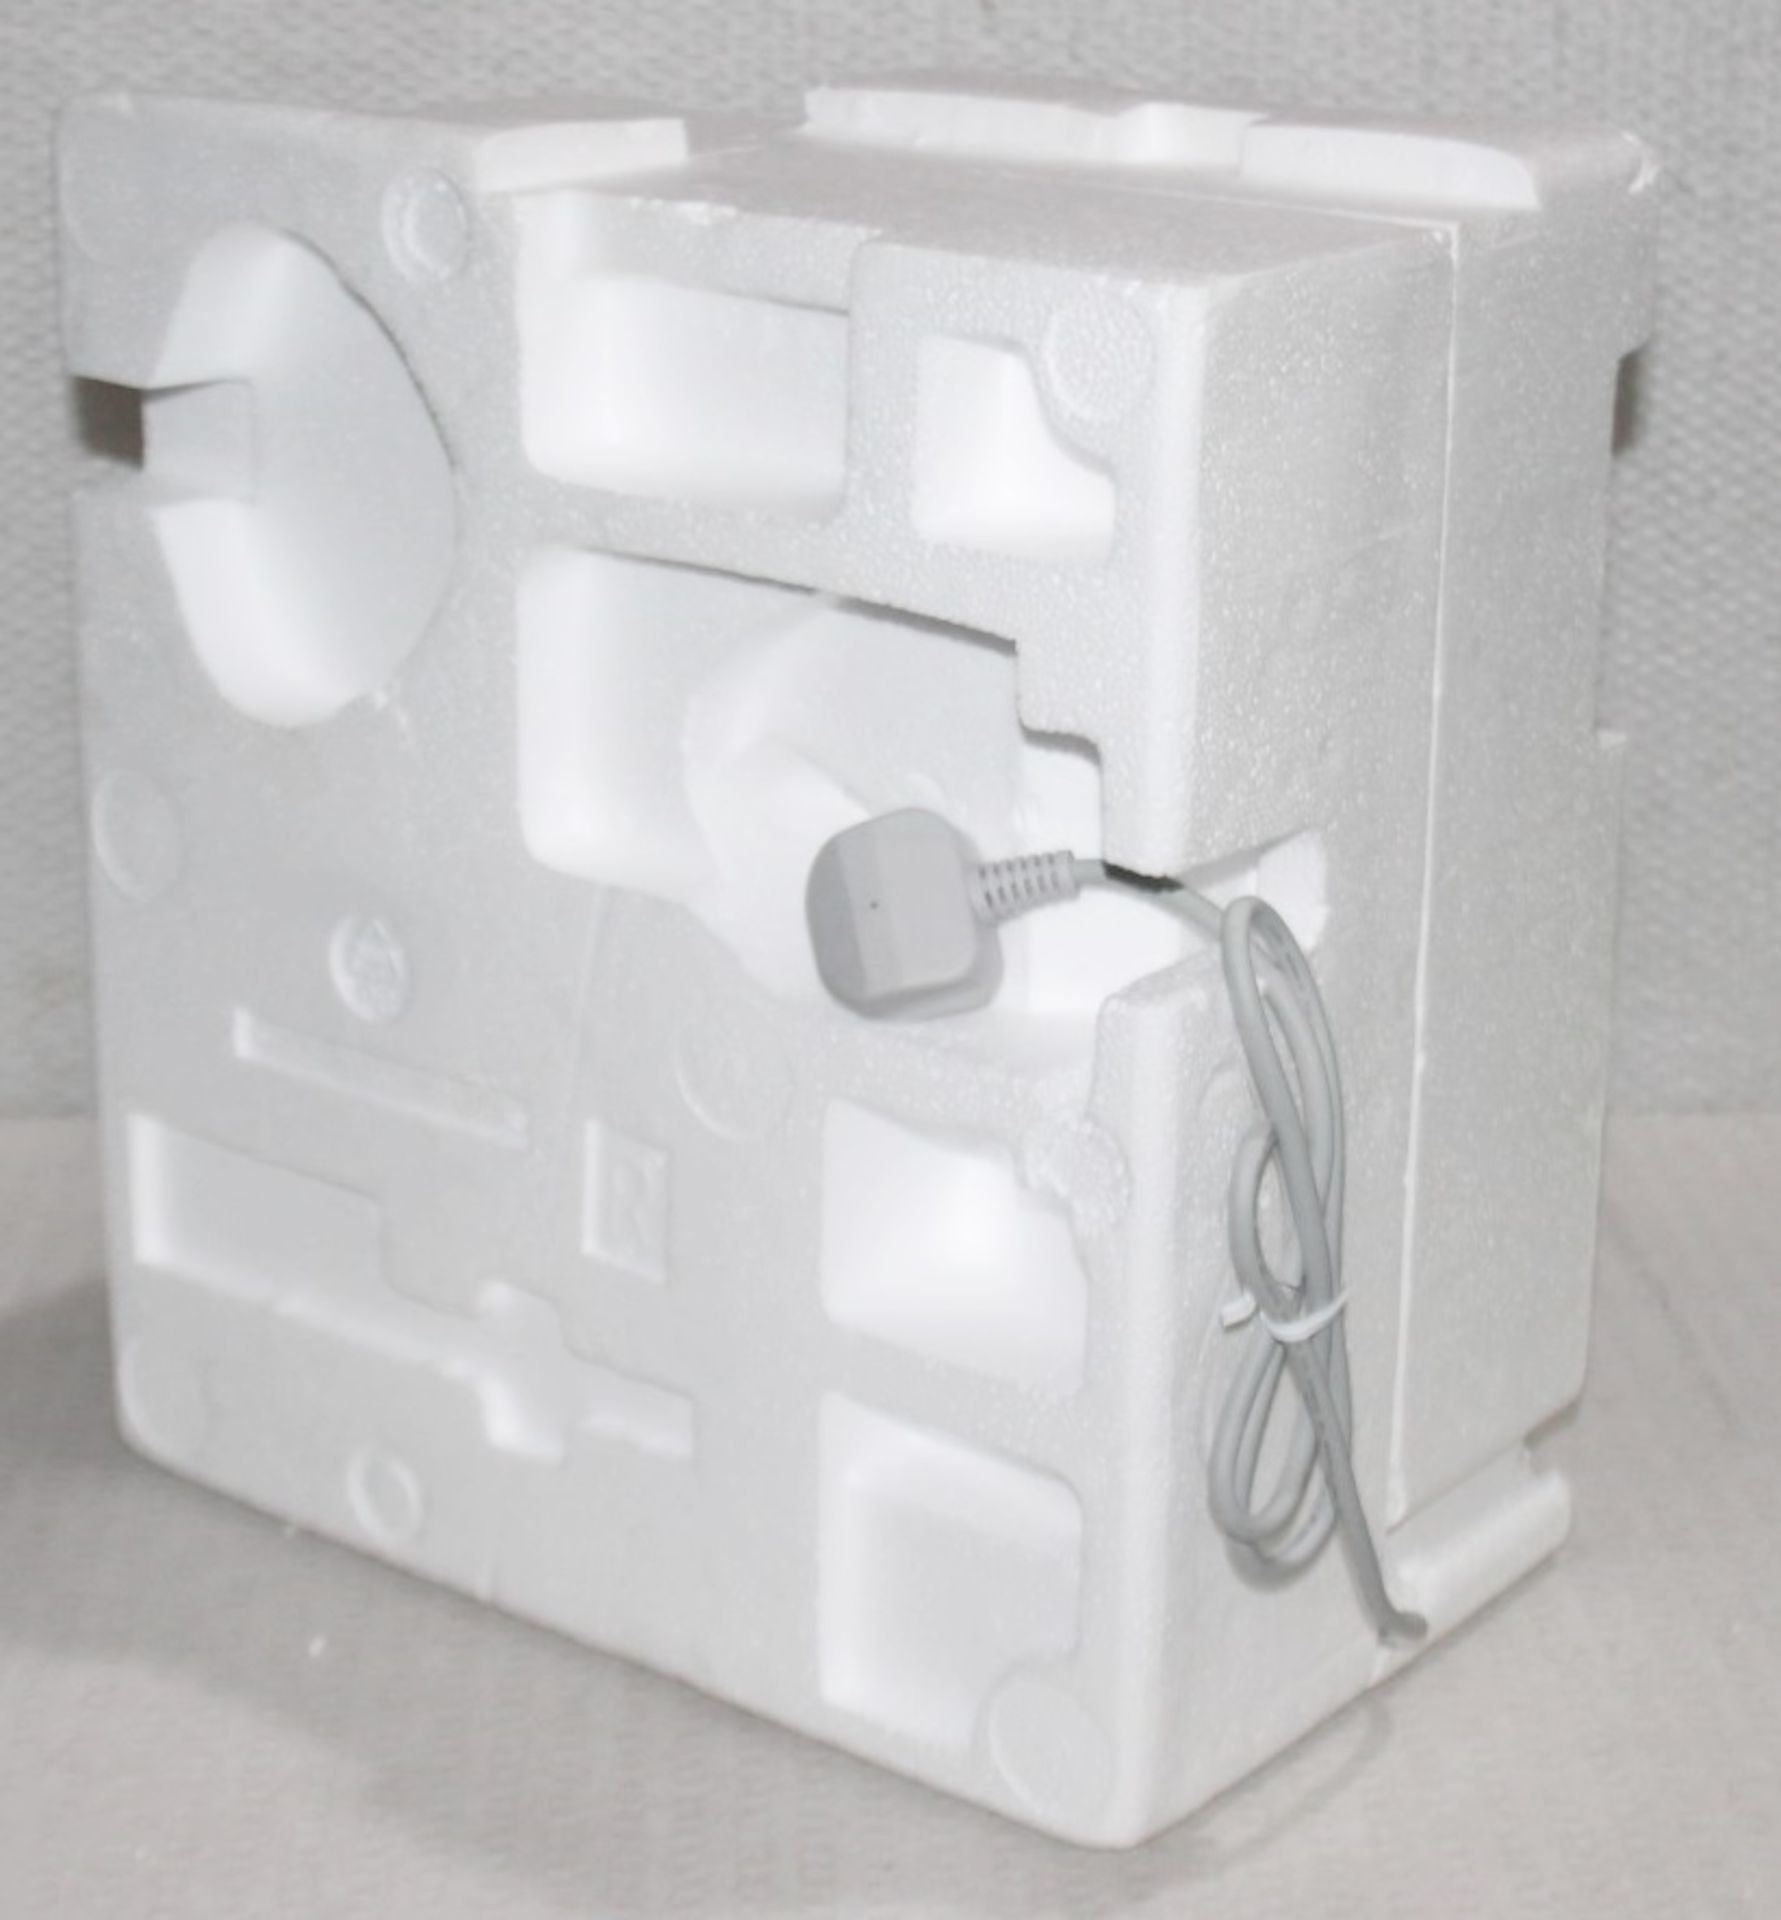 1 x SMEG Retro-style Stand Mixer (4.8L) In Cream - Original Price £499.00 - Unused Boxed Stock - Image 9 of 9